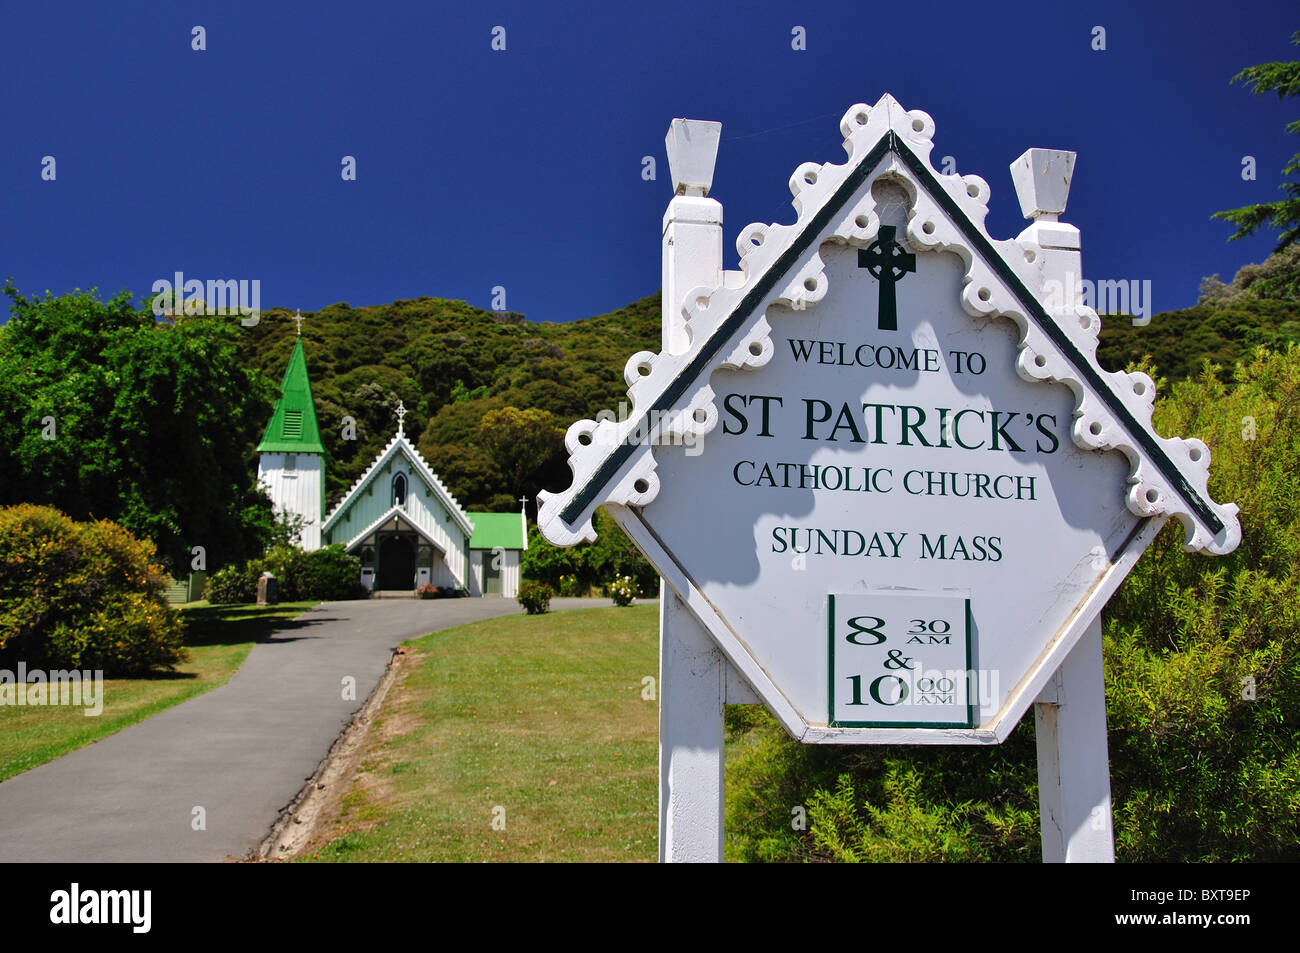 St patricks catholic church hi-res stock photography and images - Alamy